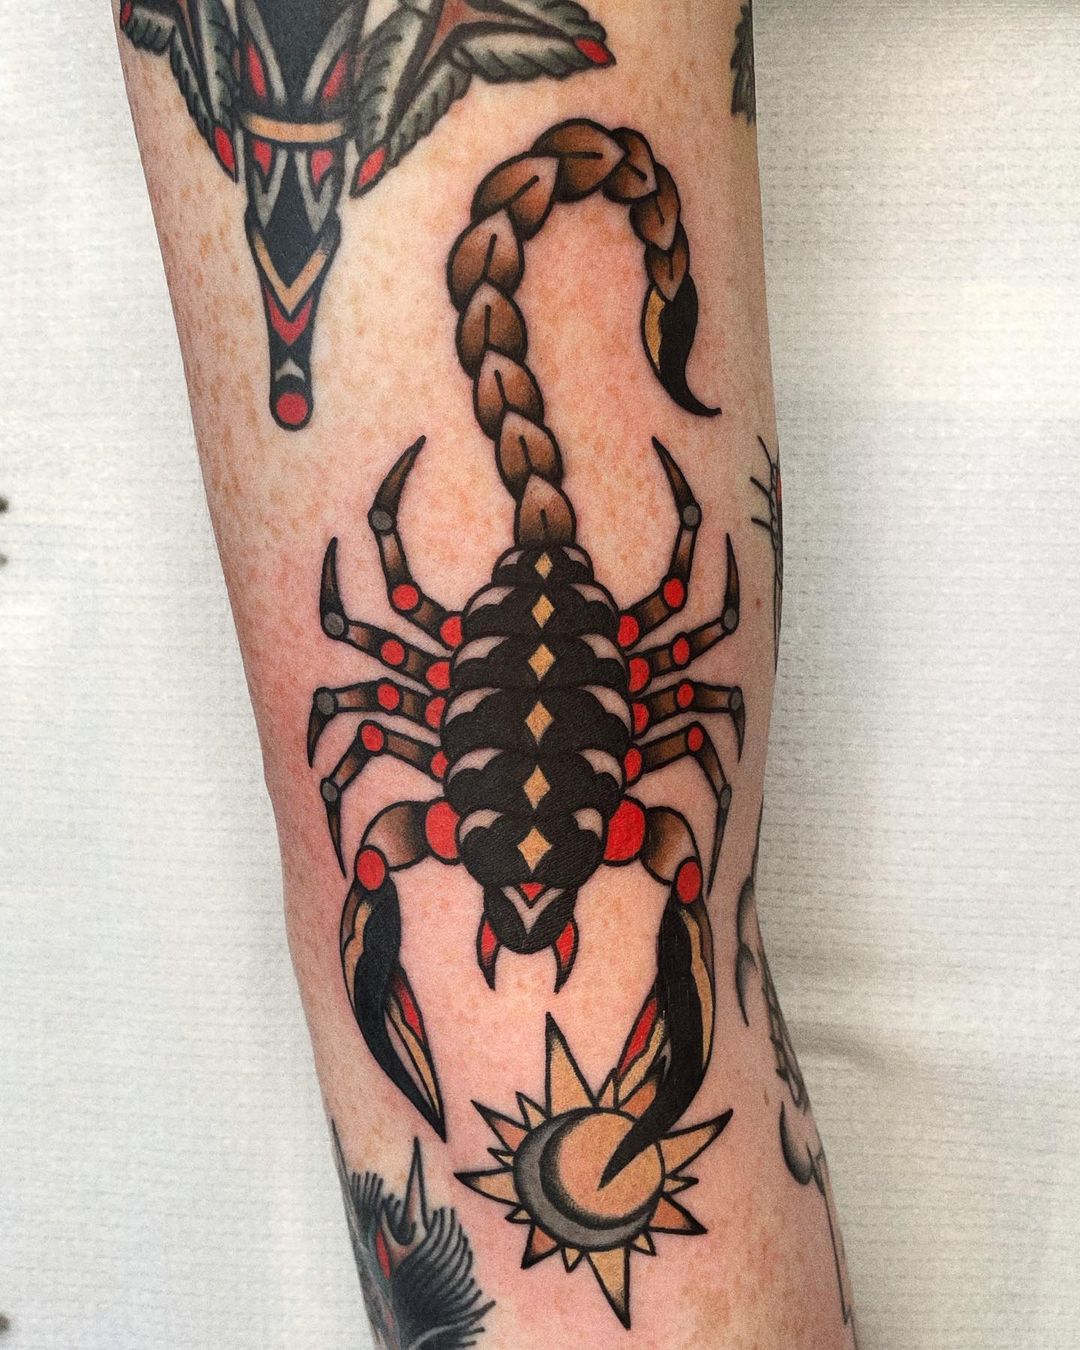 Scorpio tattoo by cruel.monica